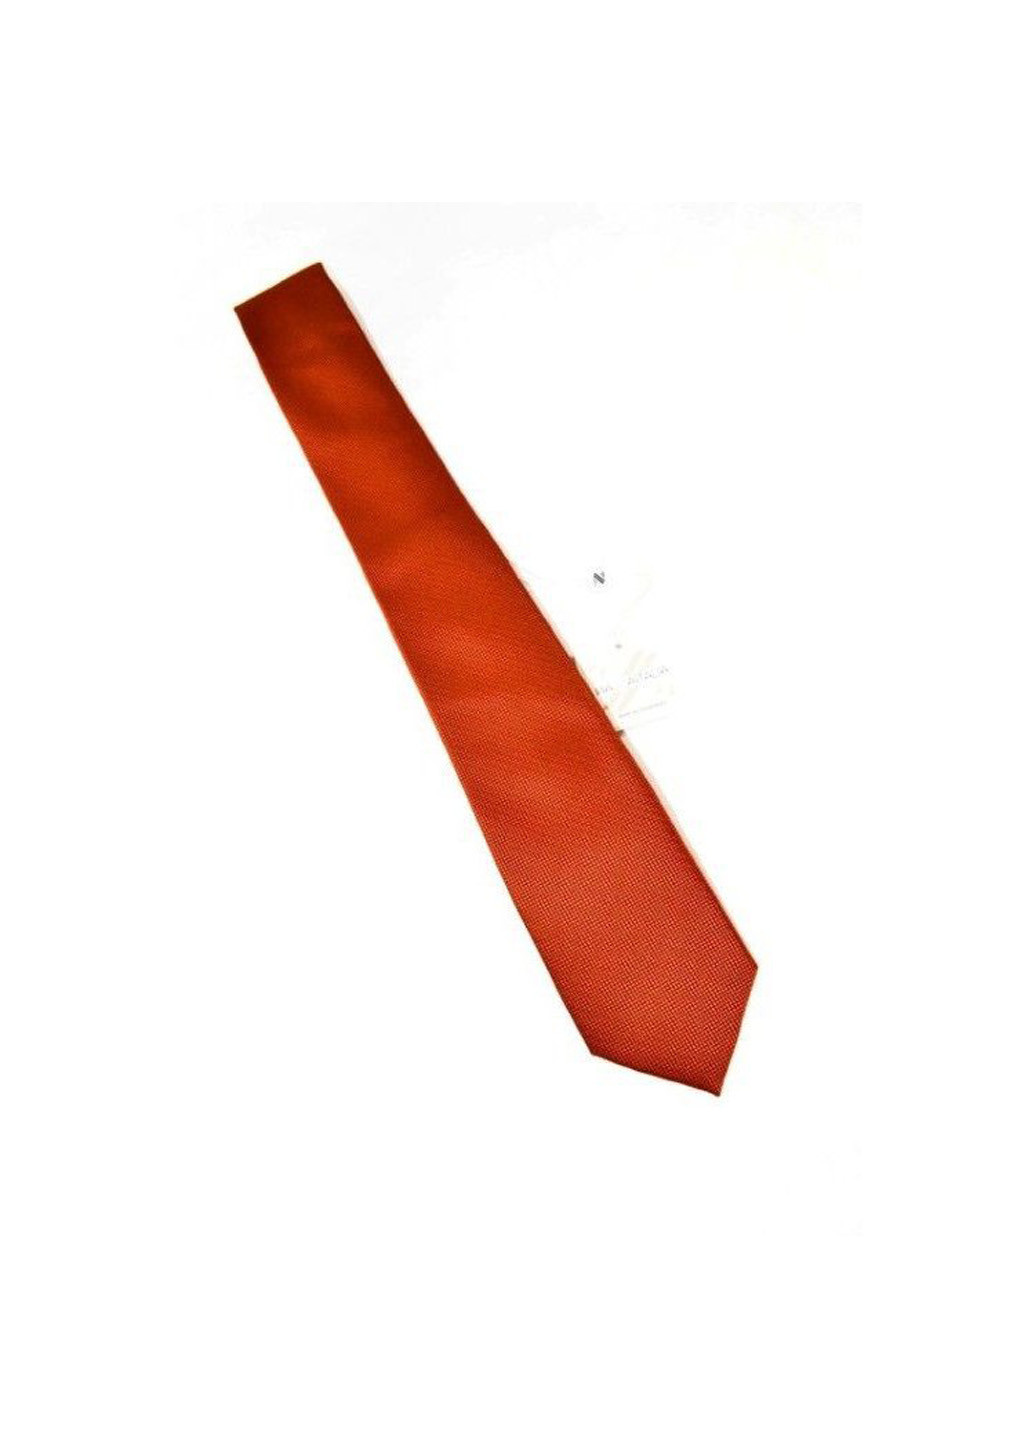 Мужской галстук 5 см Piazza Italia (191127869)